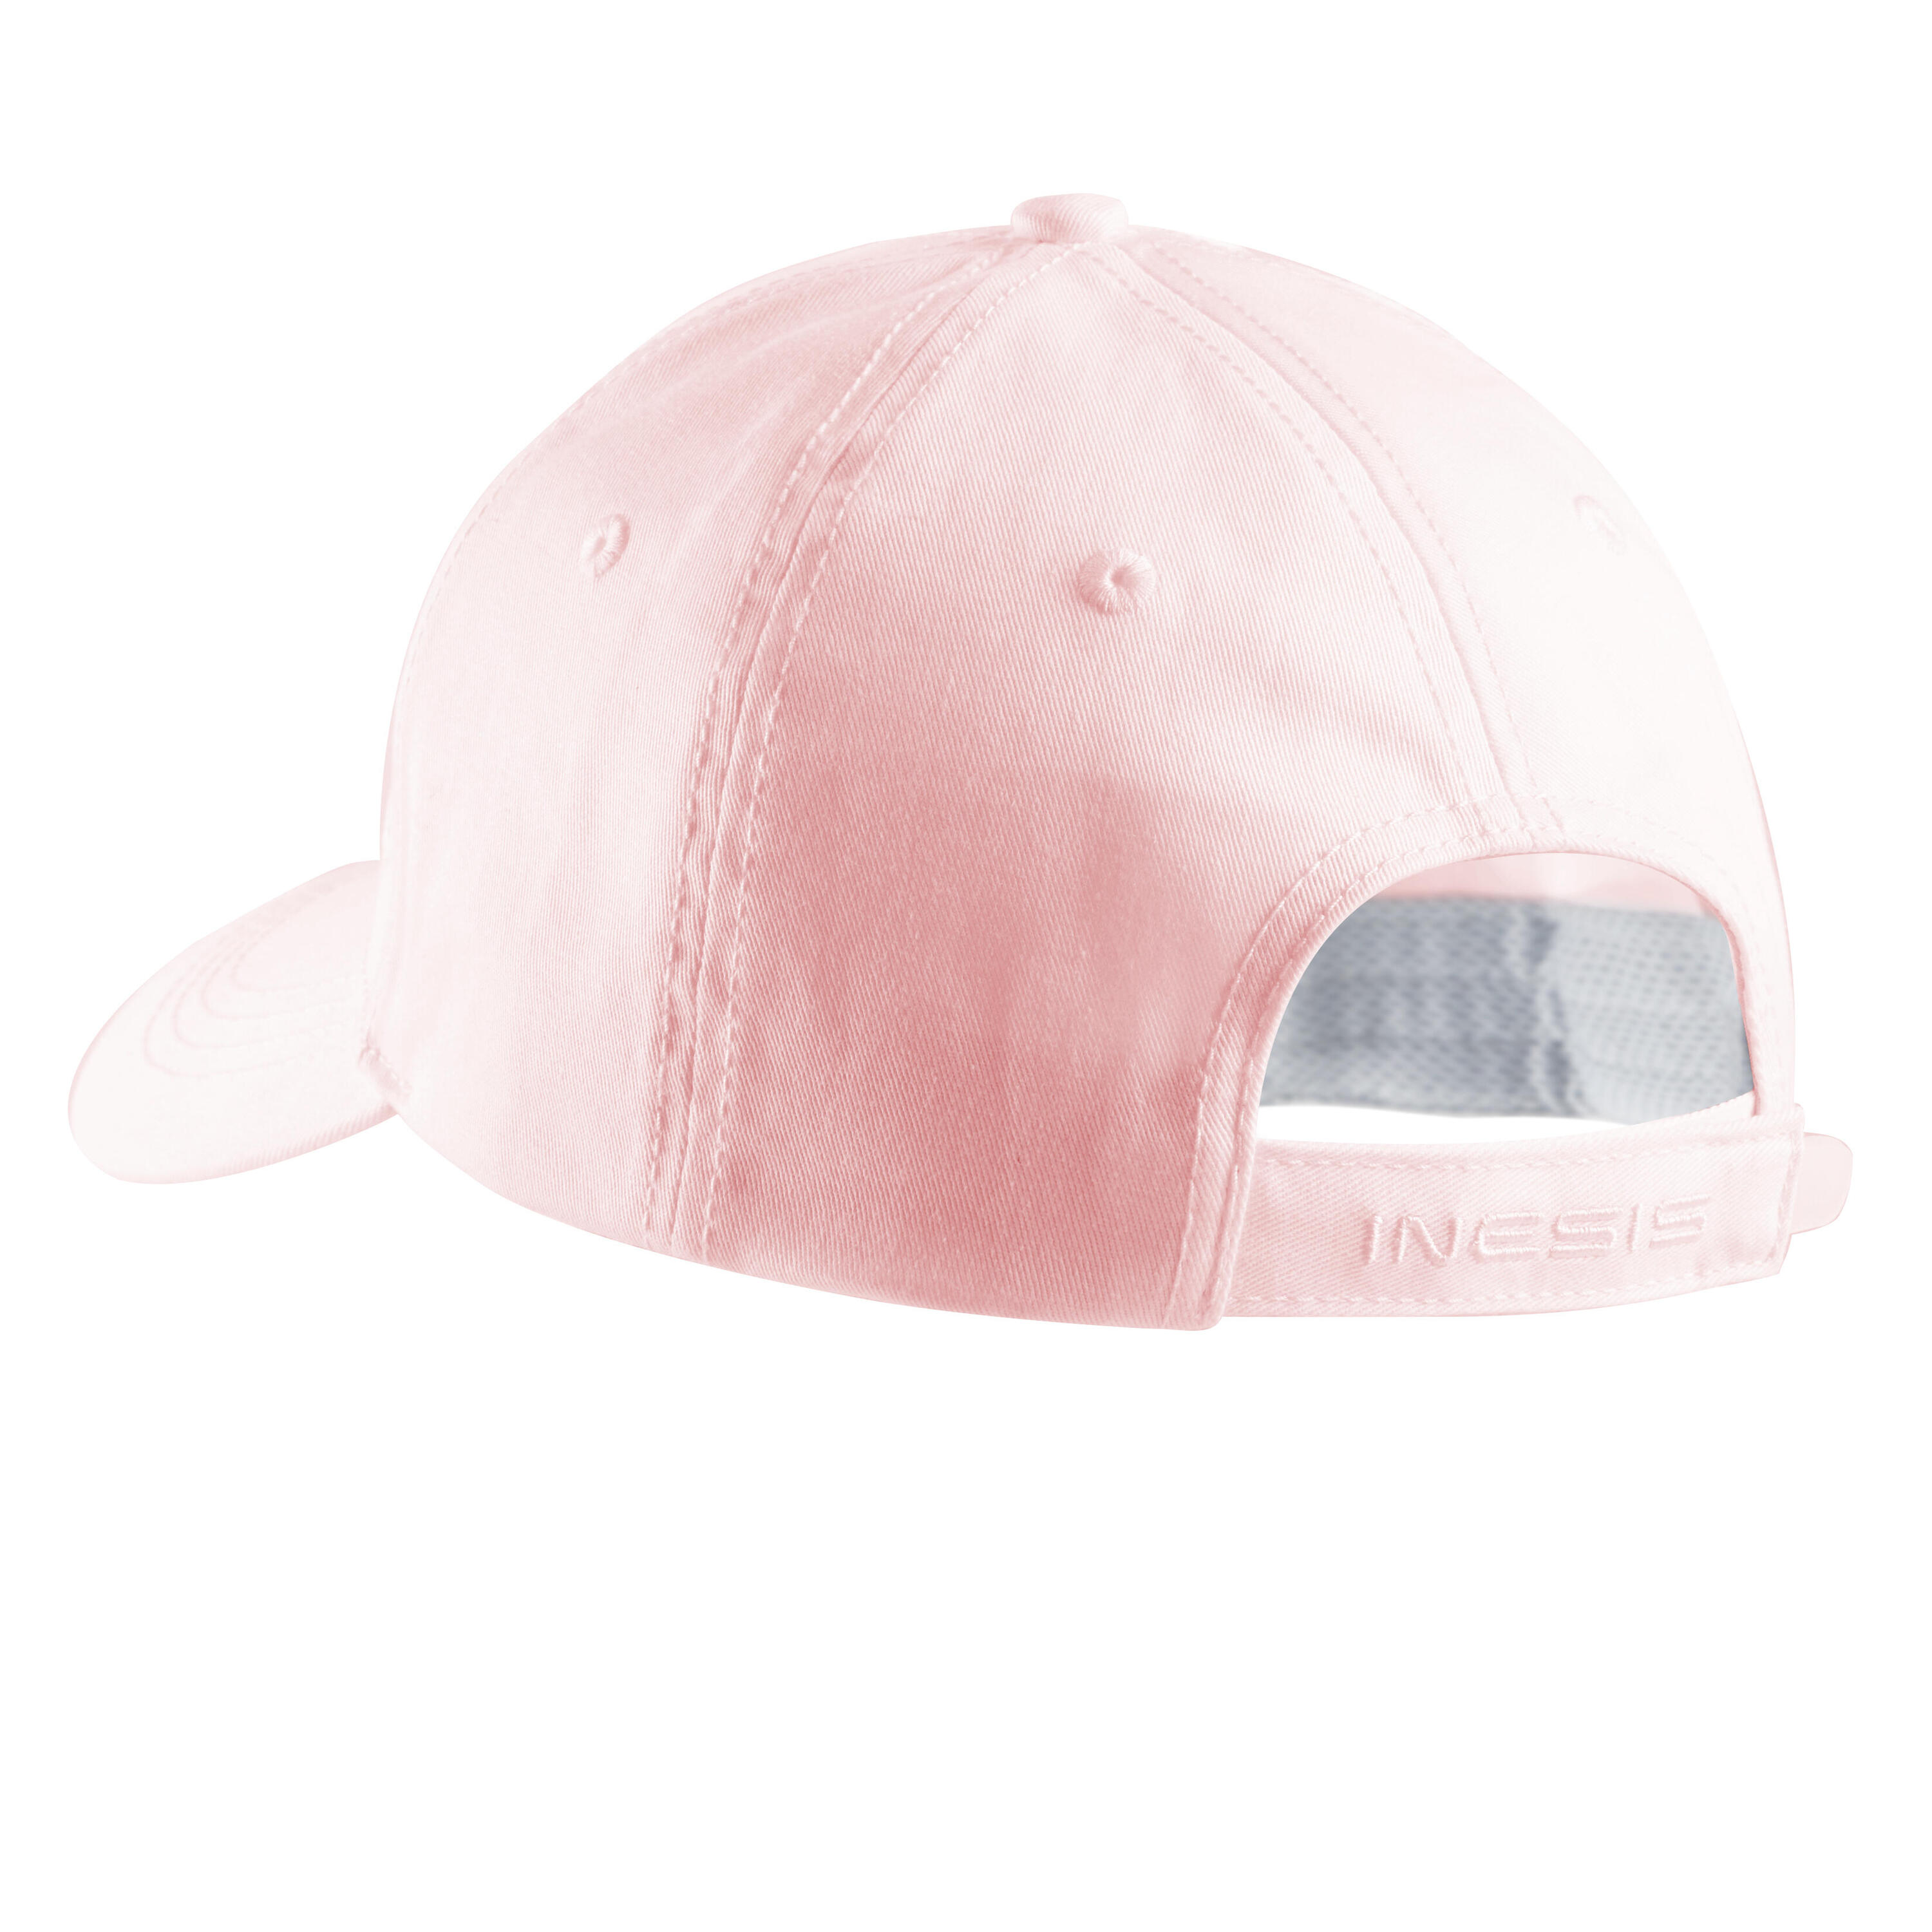 Adult's golf cap - MW 500 light pink 3/3